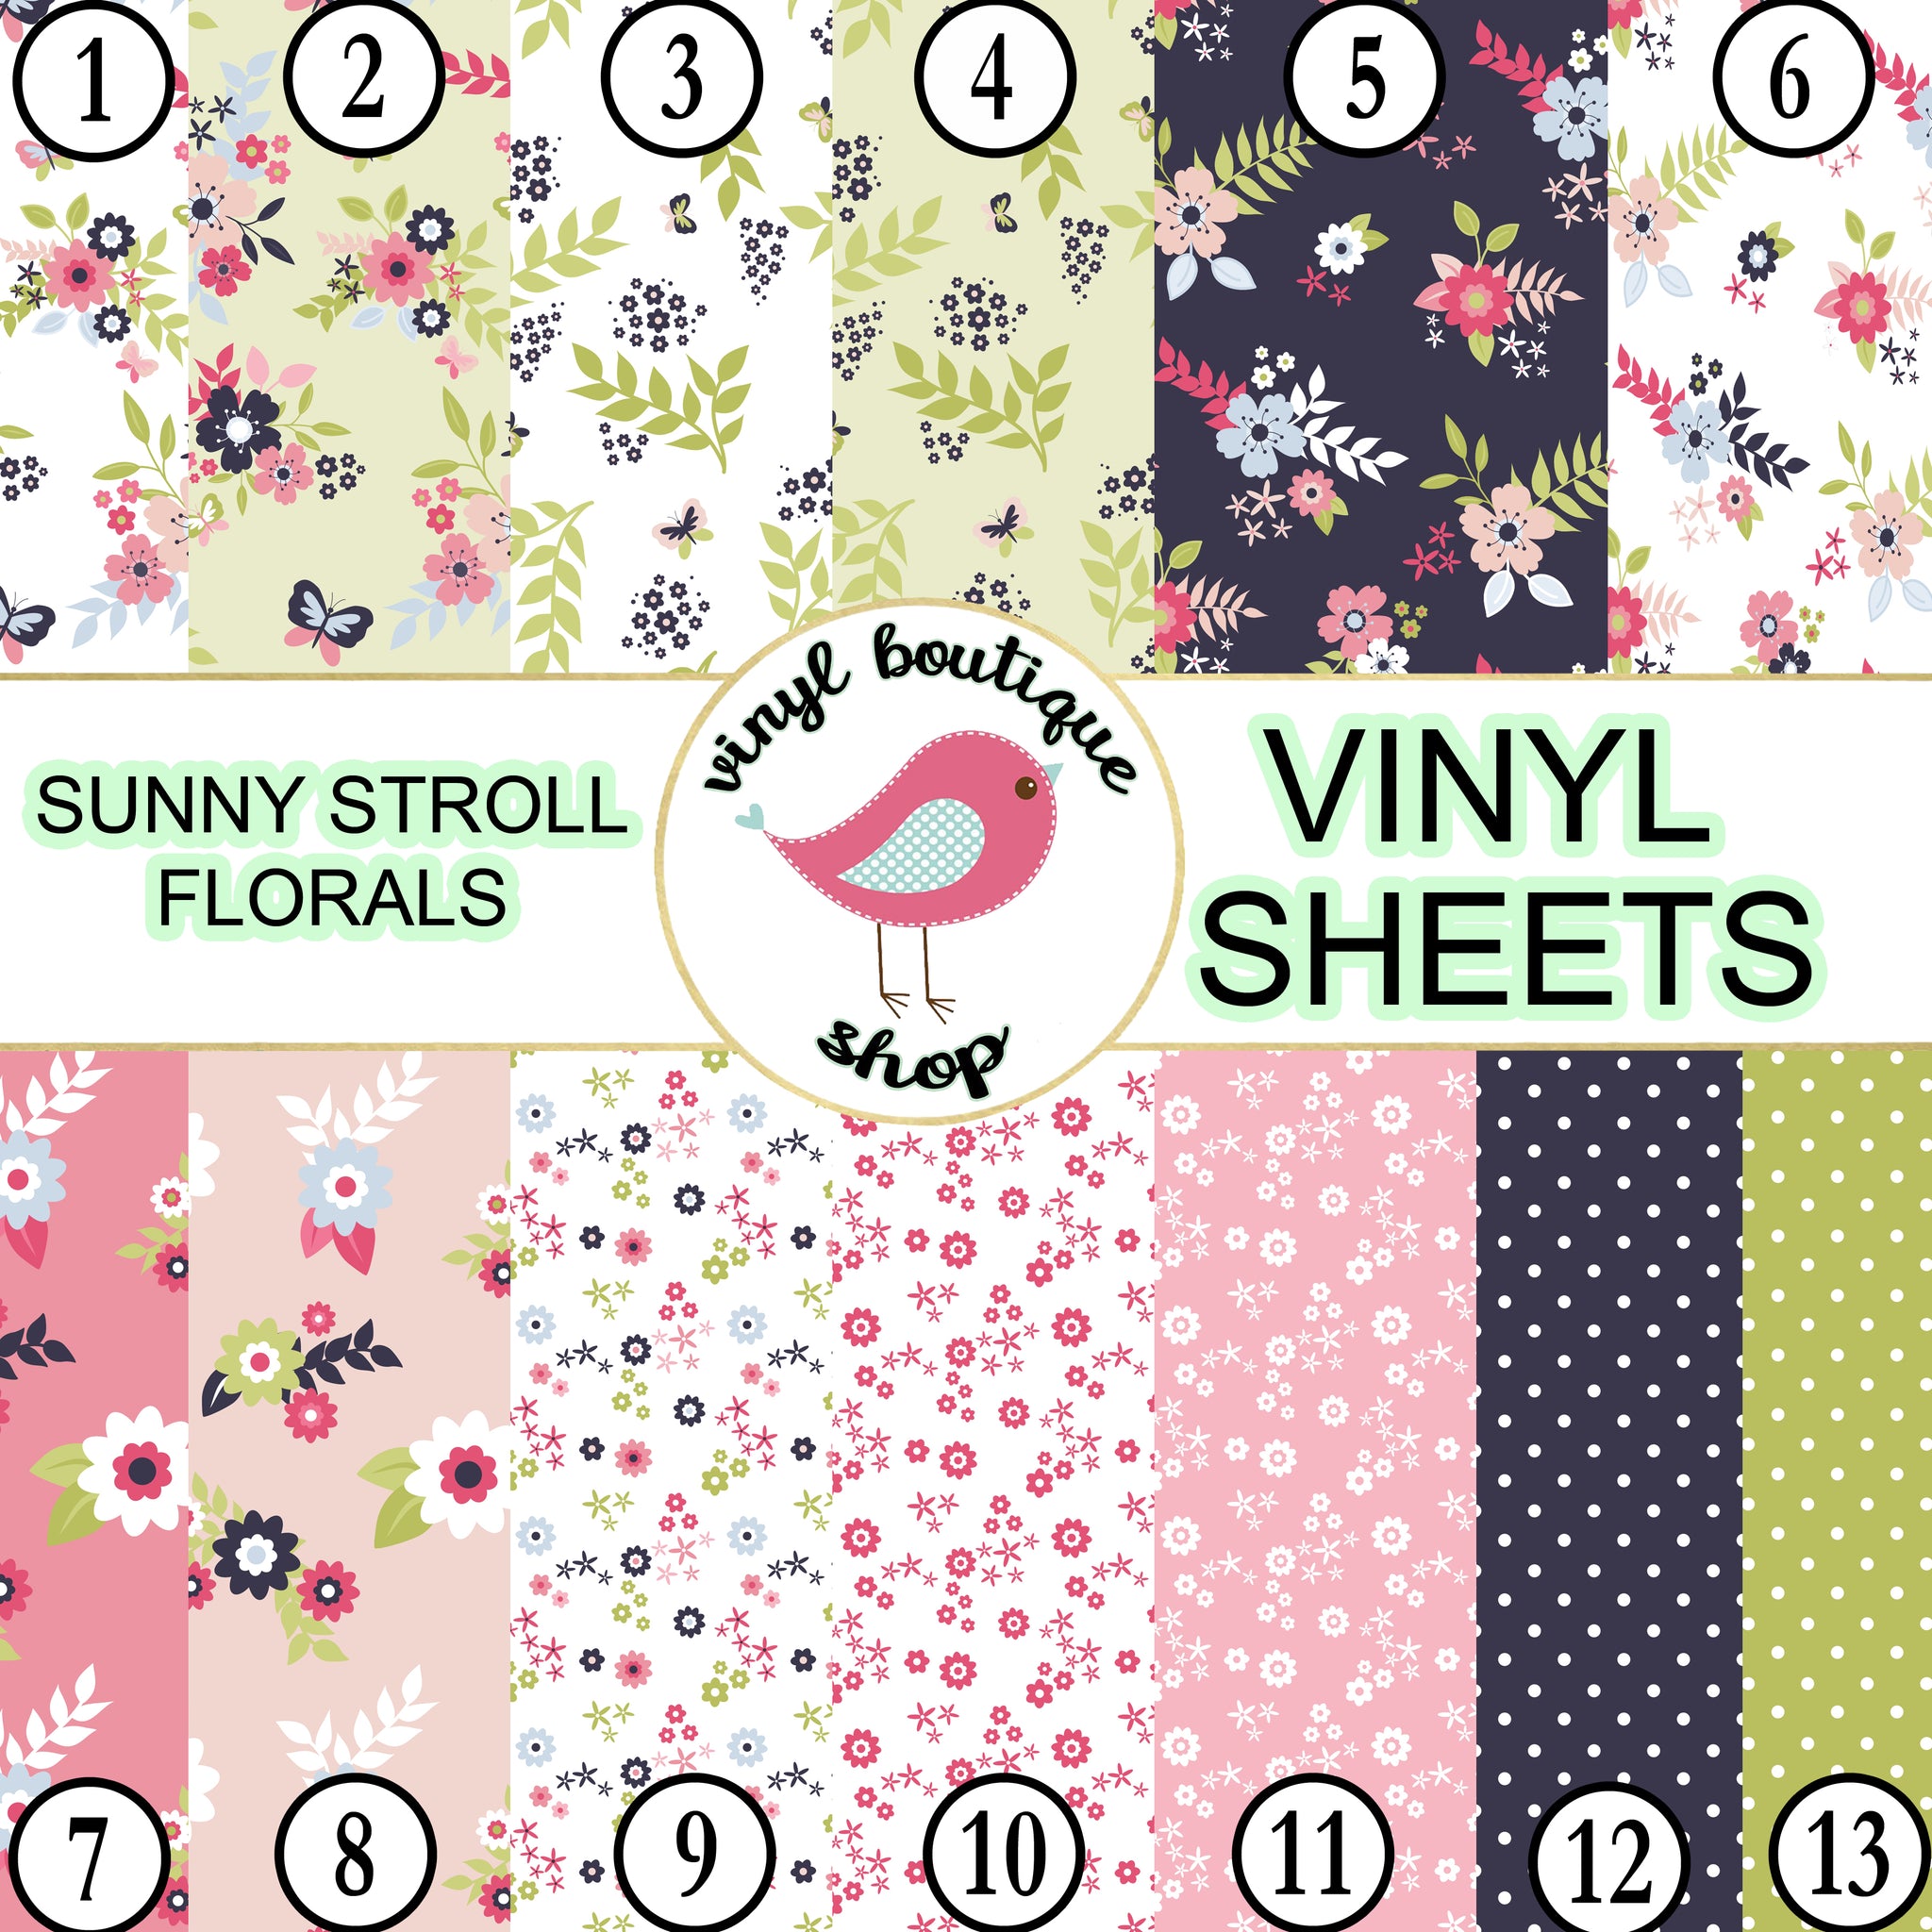 Sunny Stroll Floral Adhesive Heat Transfer Vinyl Sheet - Vinyl Boutique Shop